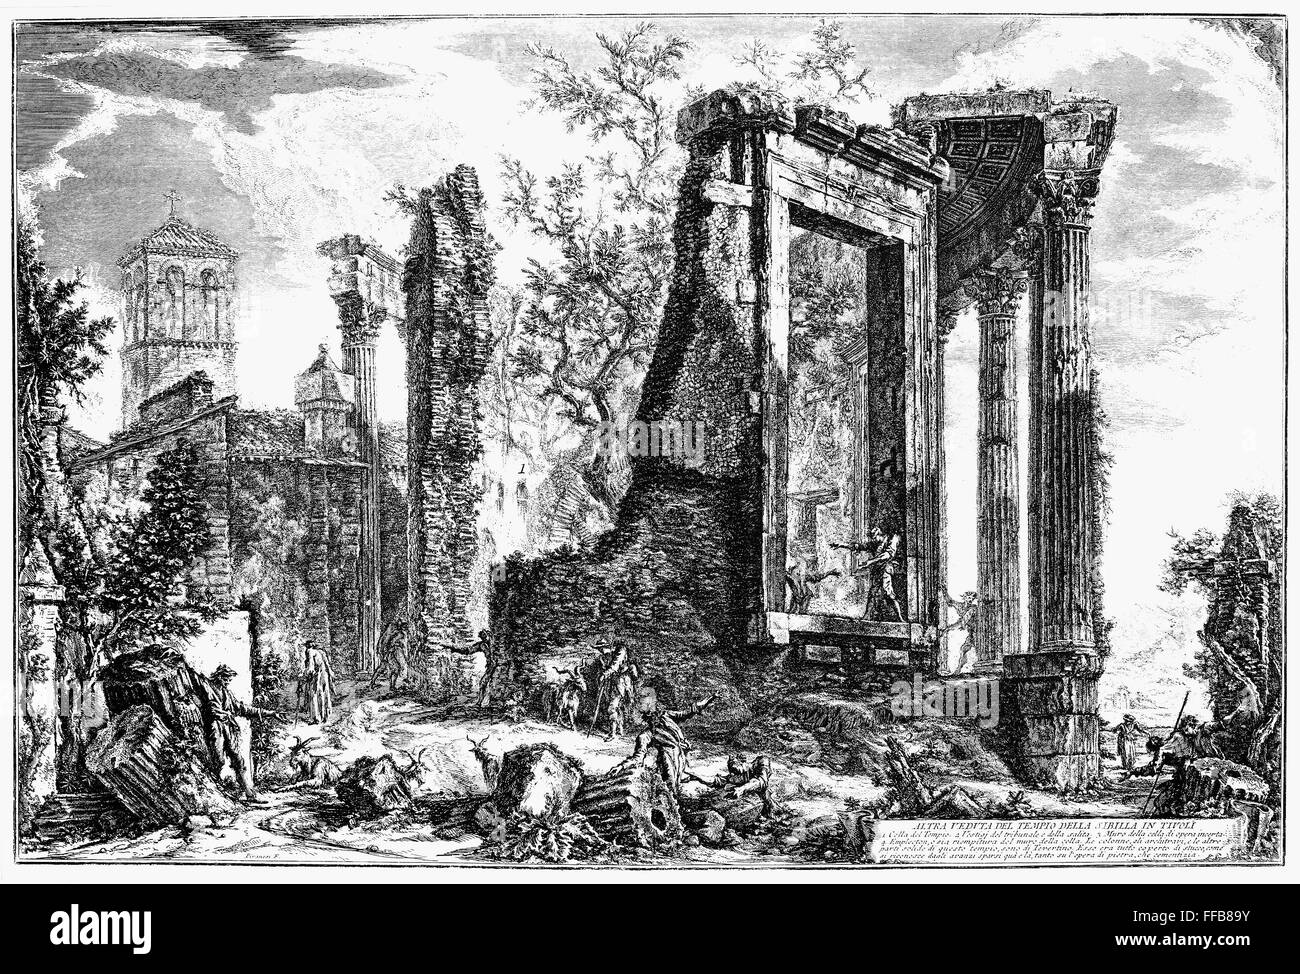 PIRANESI: TIVOLI. /nView of the Temple of the Sibyl in Tivoli, Italy. Etching by Giovanni Battista Piranesi (1729-1778). Stock Photo